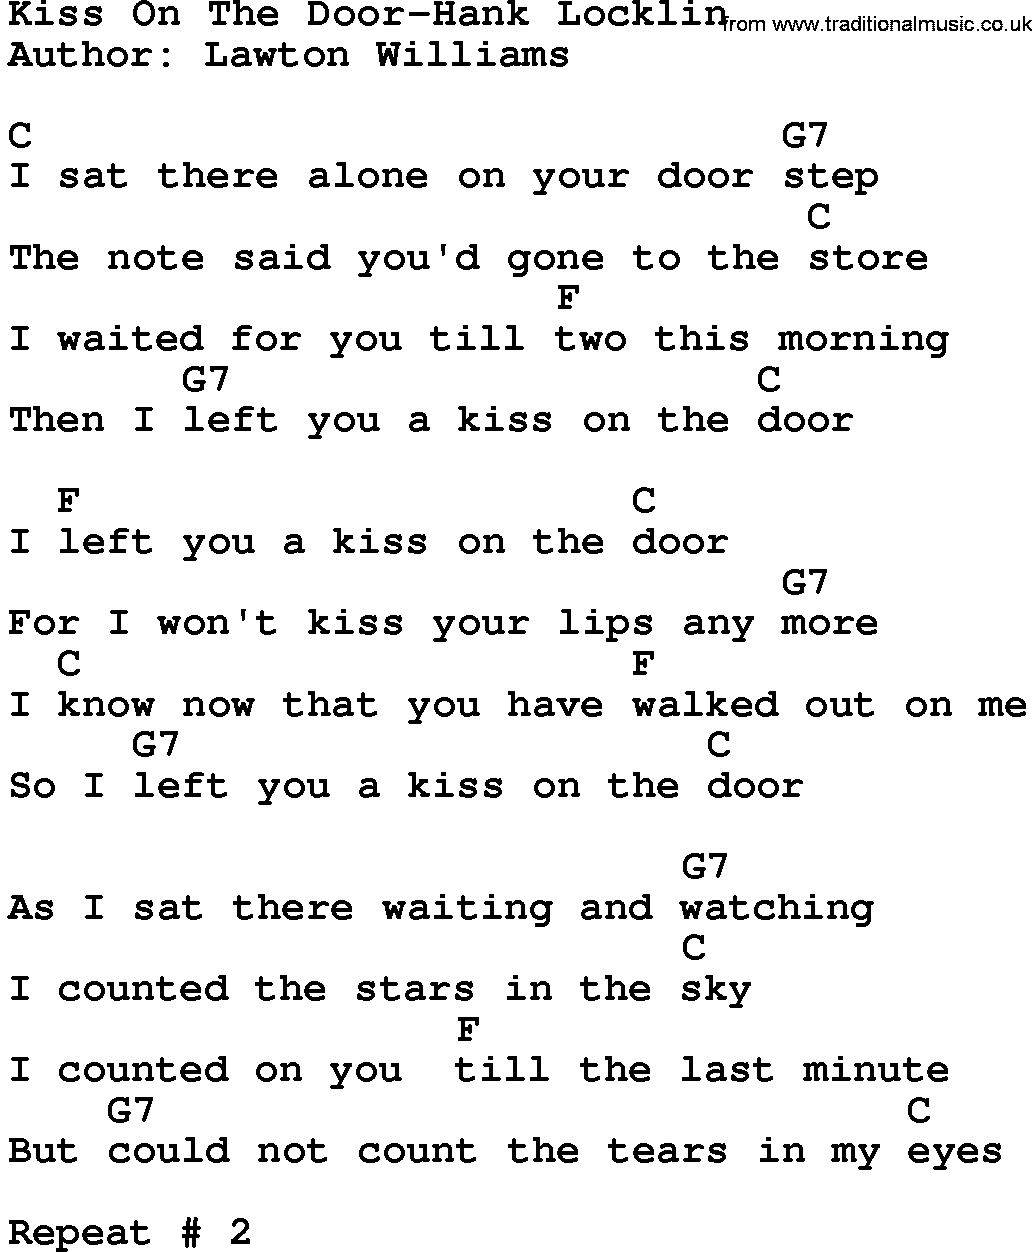 Country music song: Kiss On The Door-Hank Locklin lyrics and chords